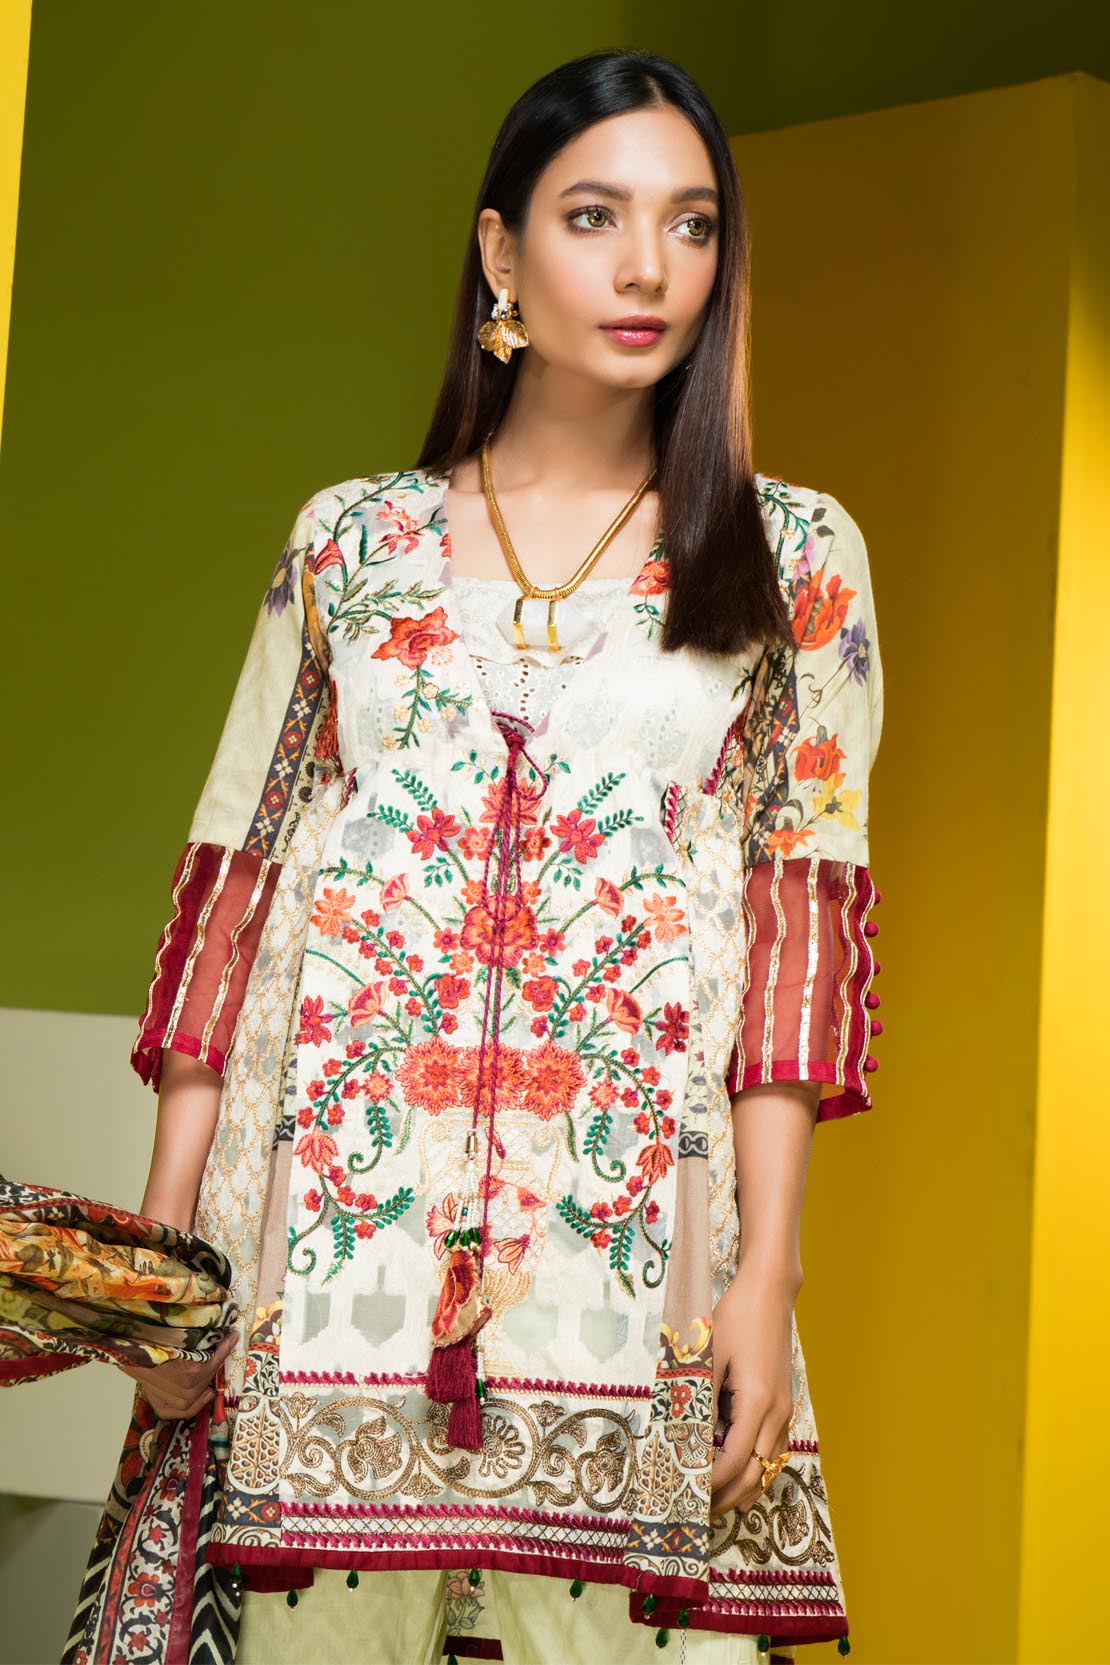 This beautiful Pakistani semi formal dress by Warda Saleem in jacquard fabric